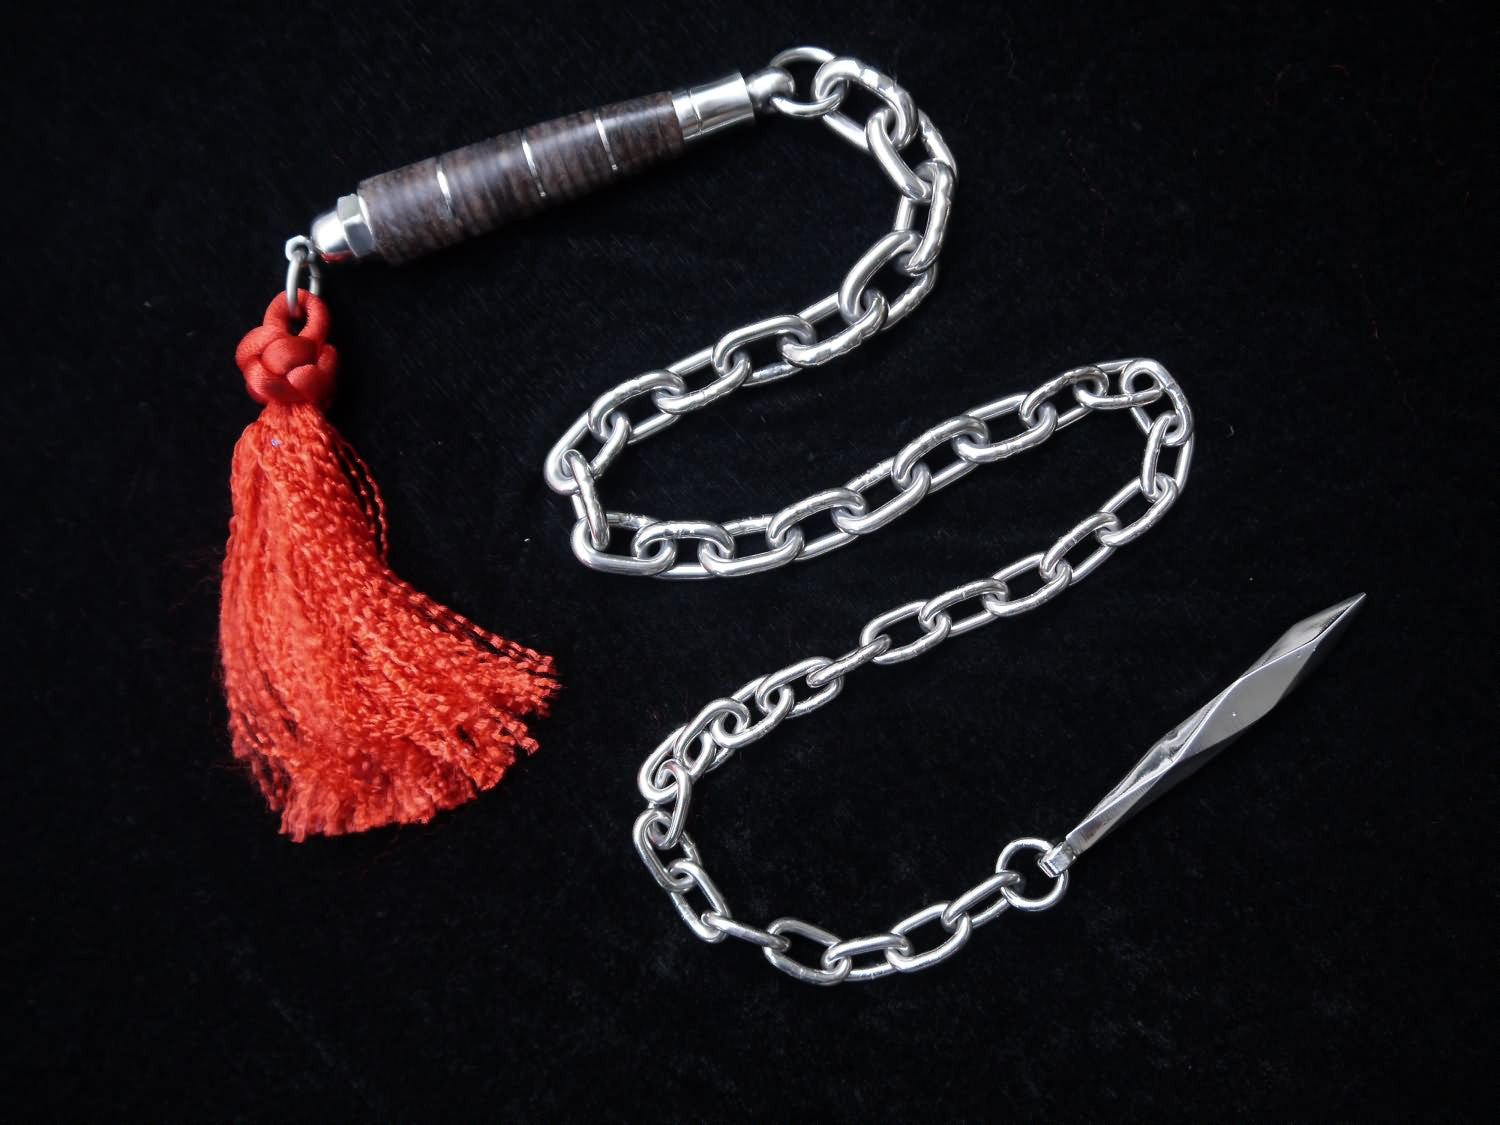 chinese chain whip